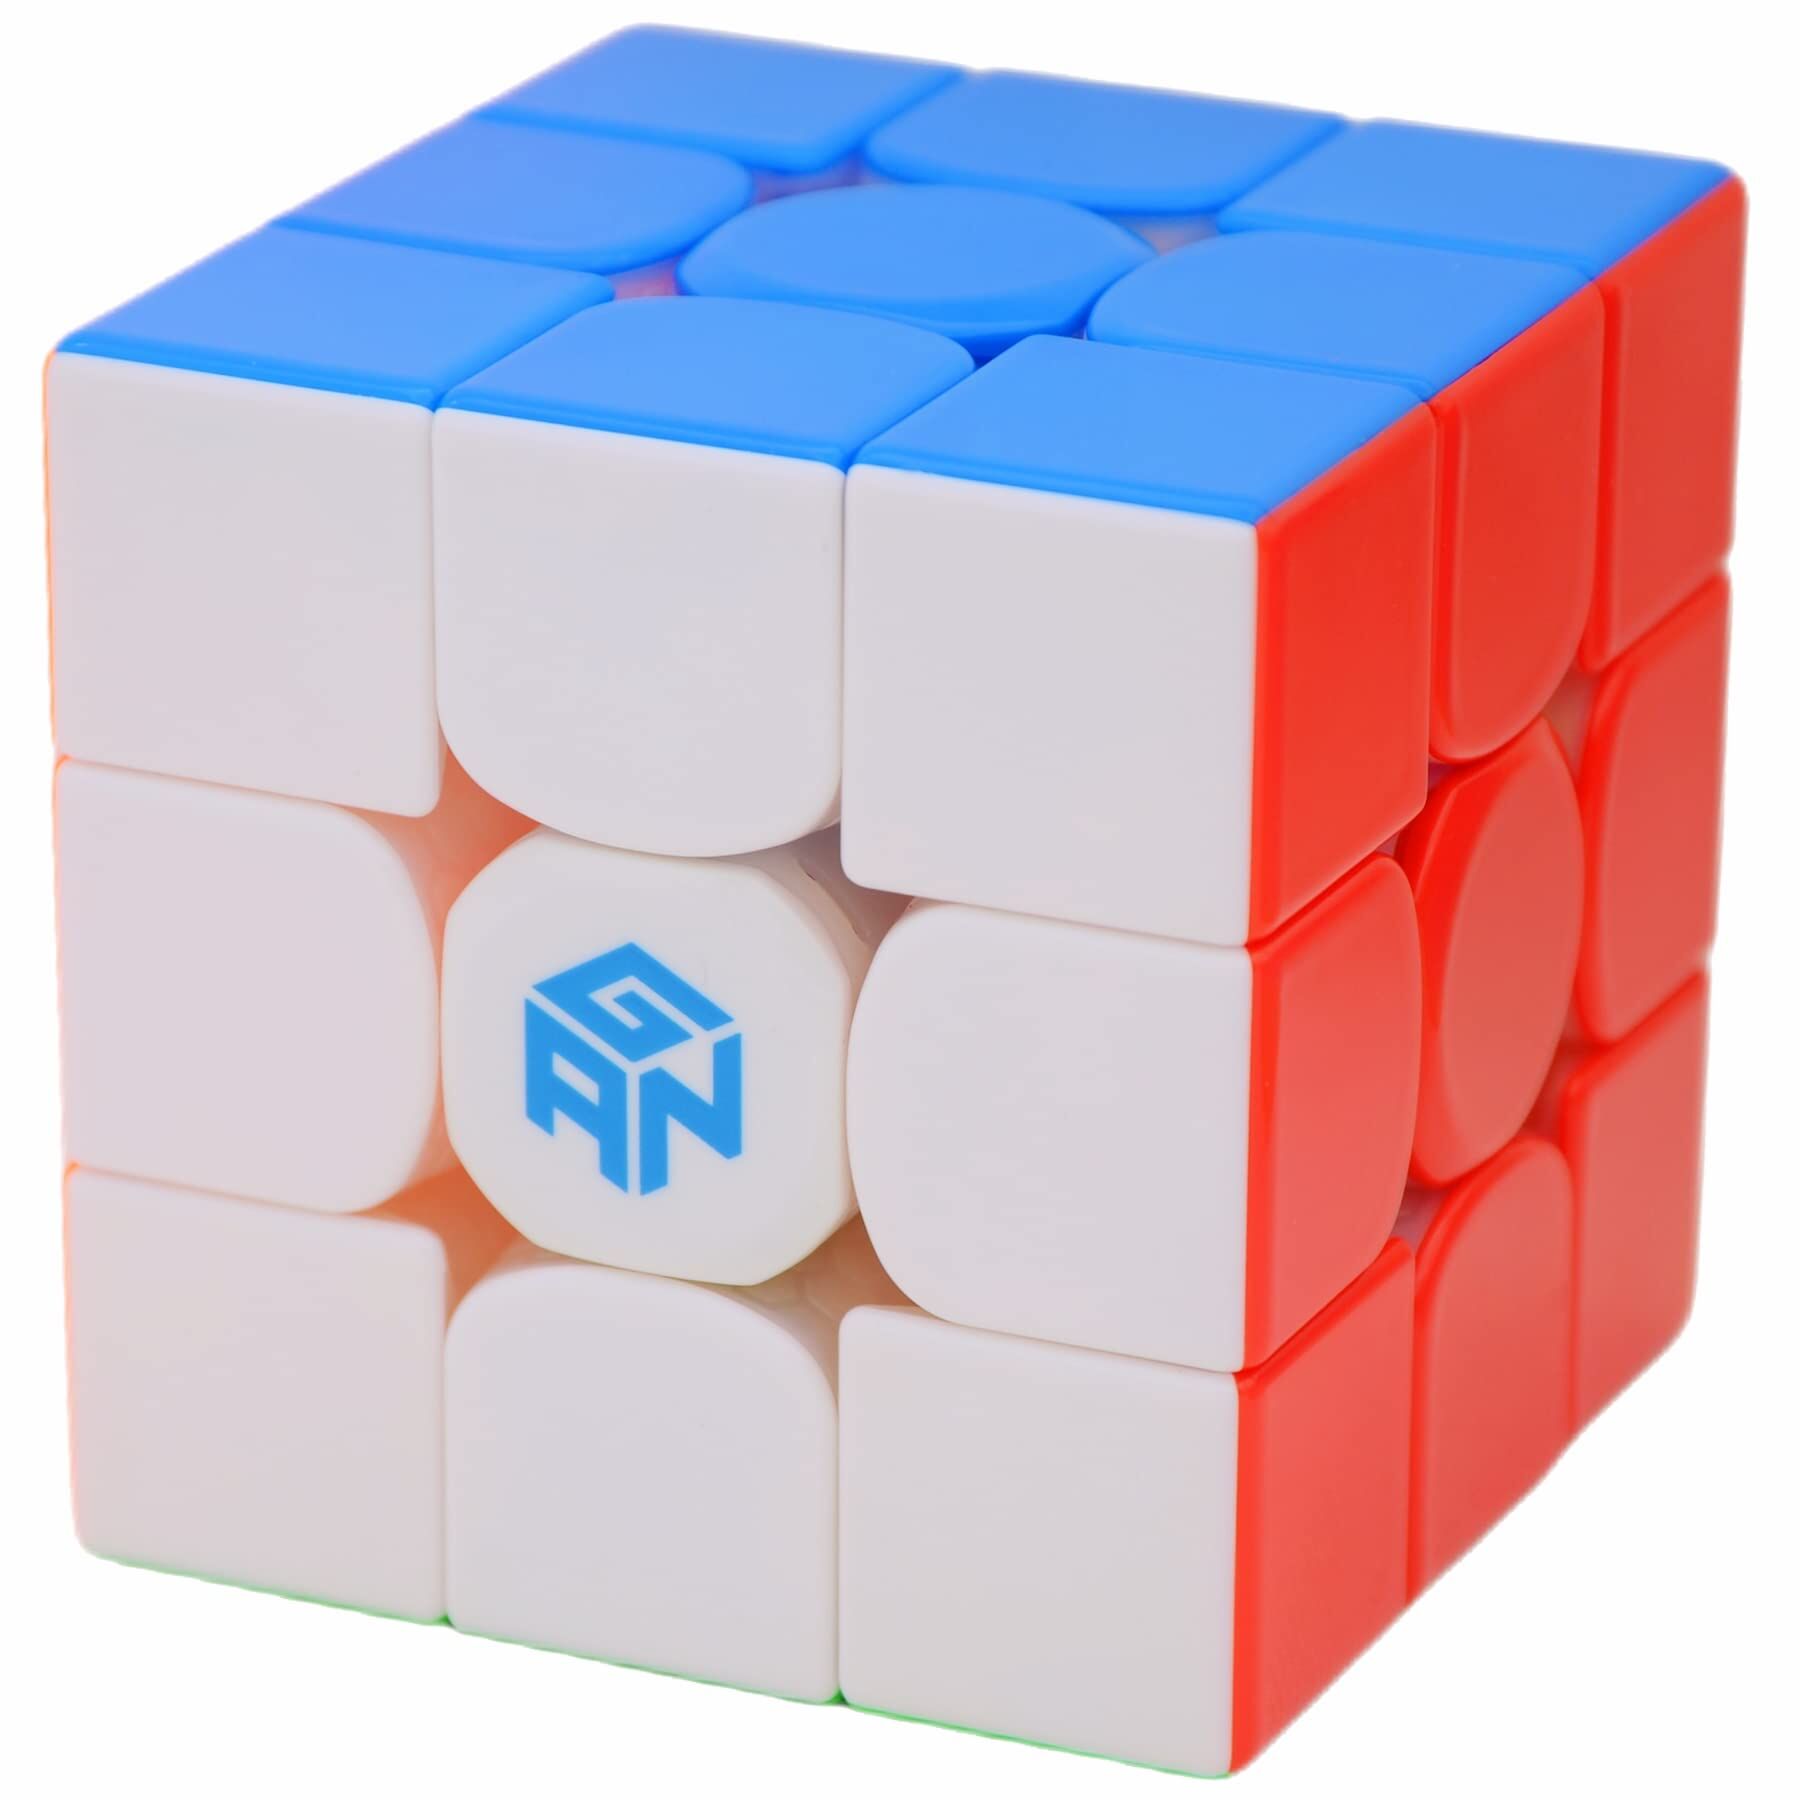 3x3x3 Rubik's Cube, Speedcubesolving Wiki